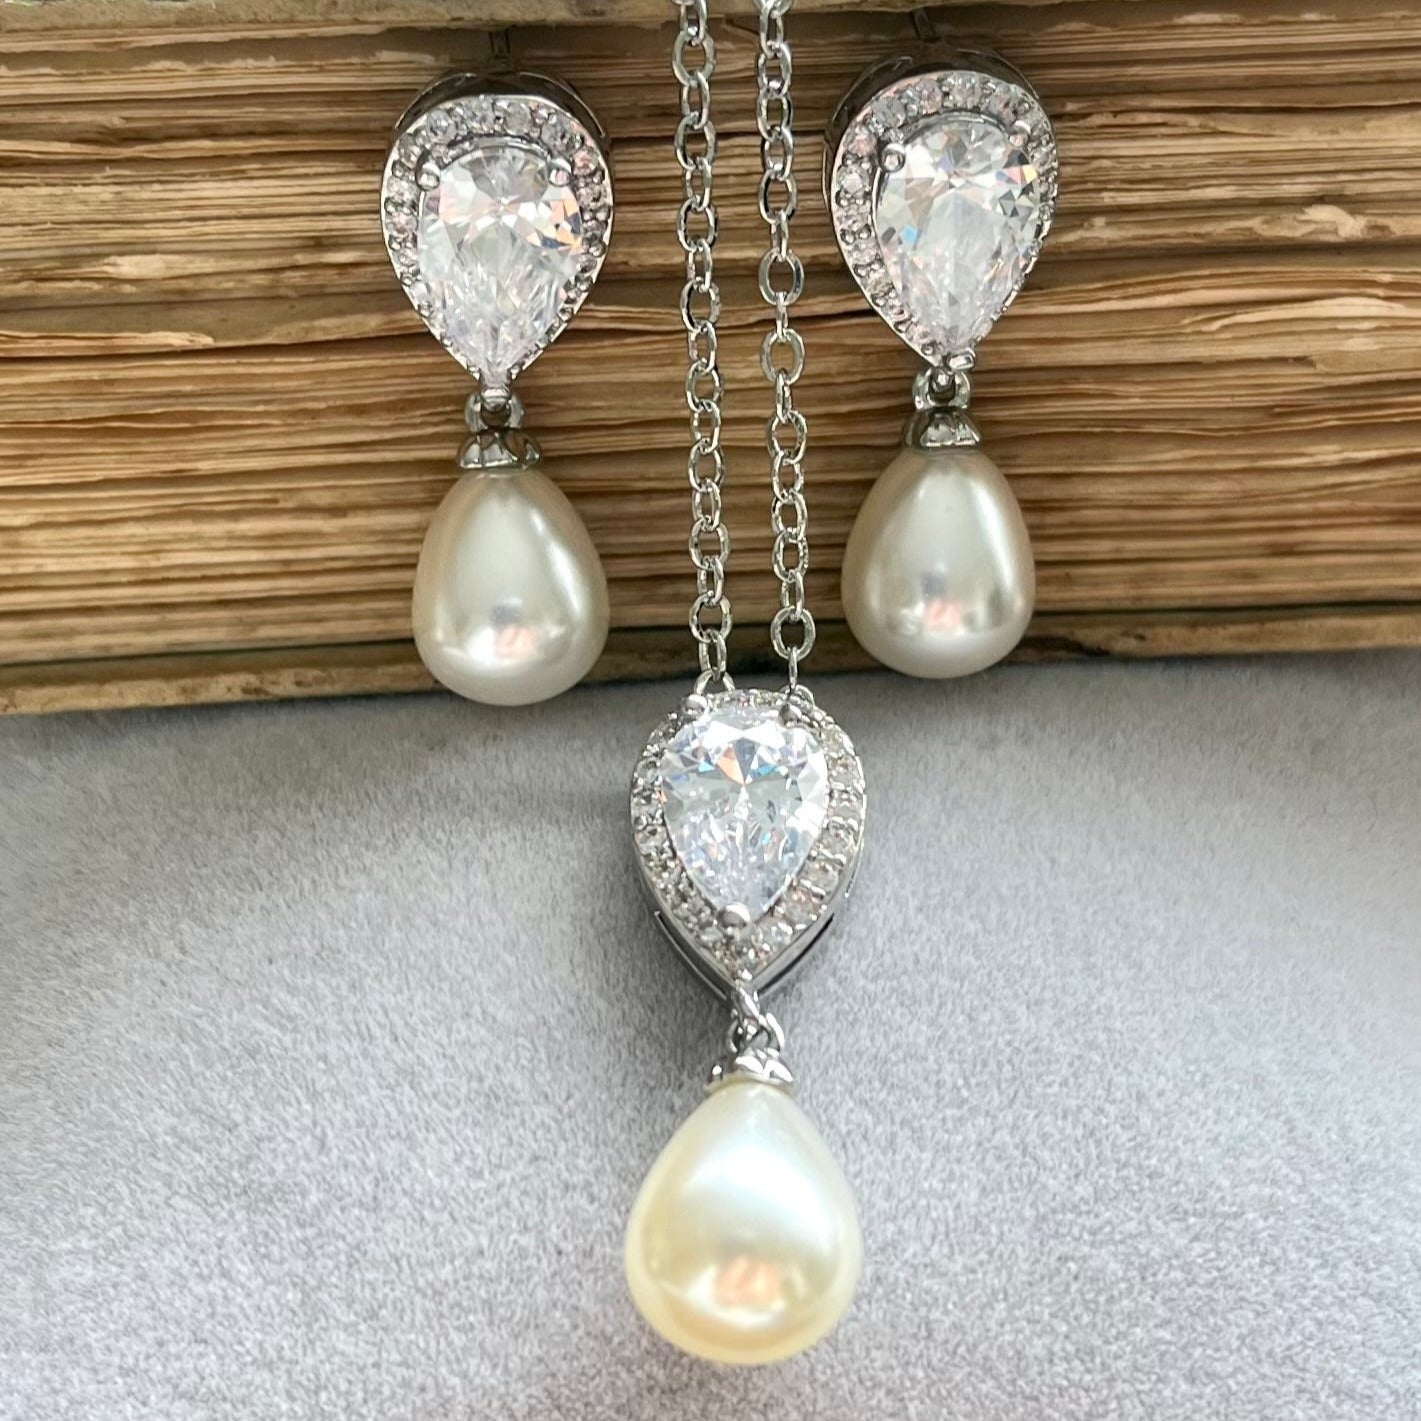 Alisha Jewellery Set, Silver Crystal Teardrop Pearl Earrings with Pendant Necklace